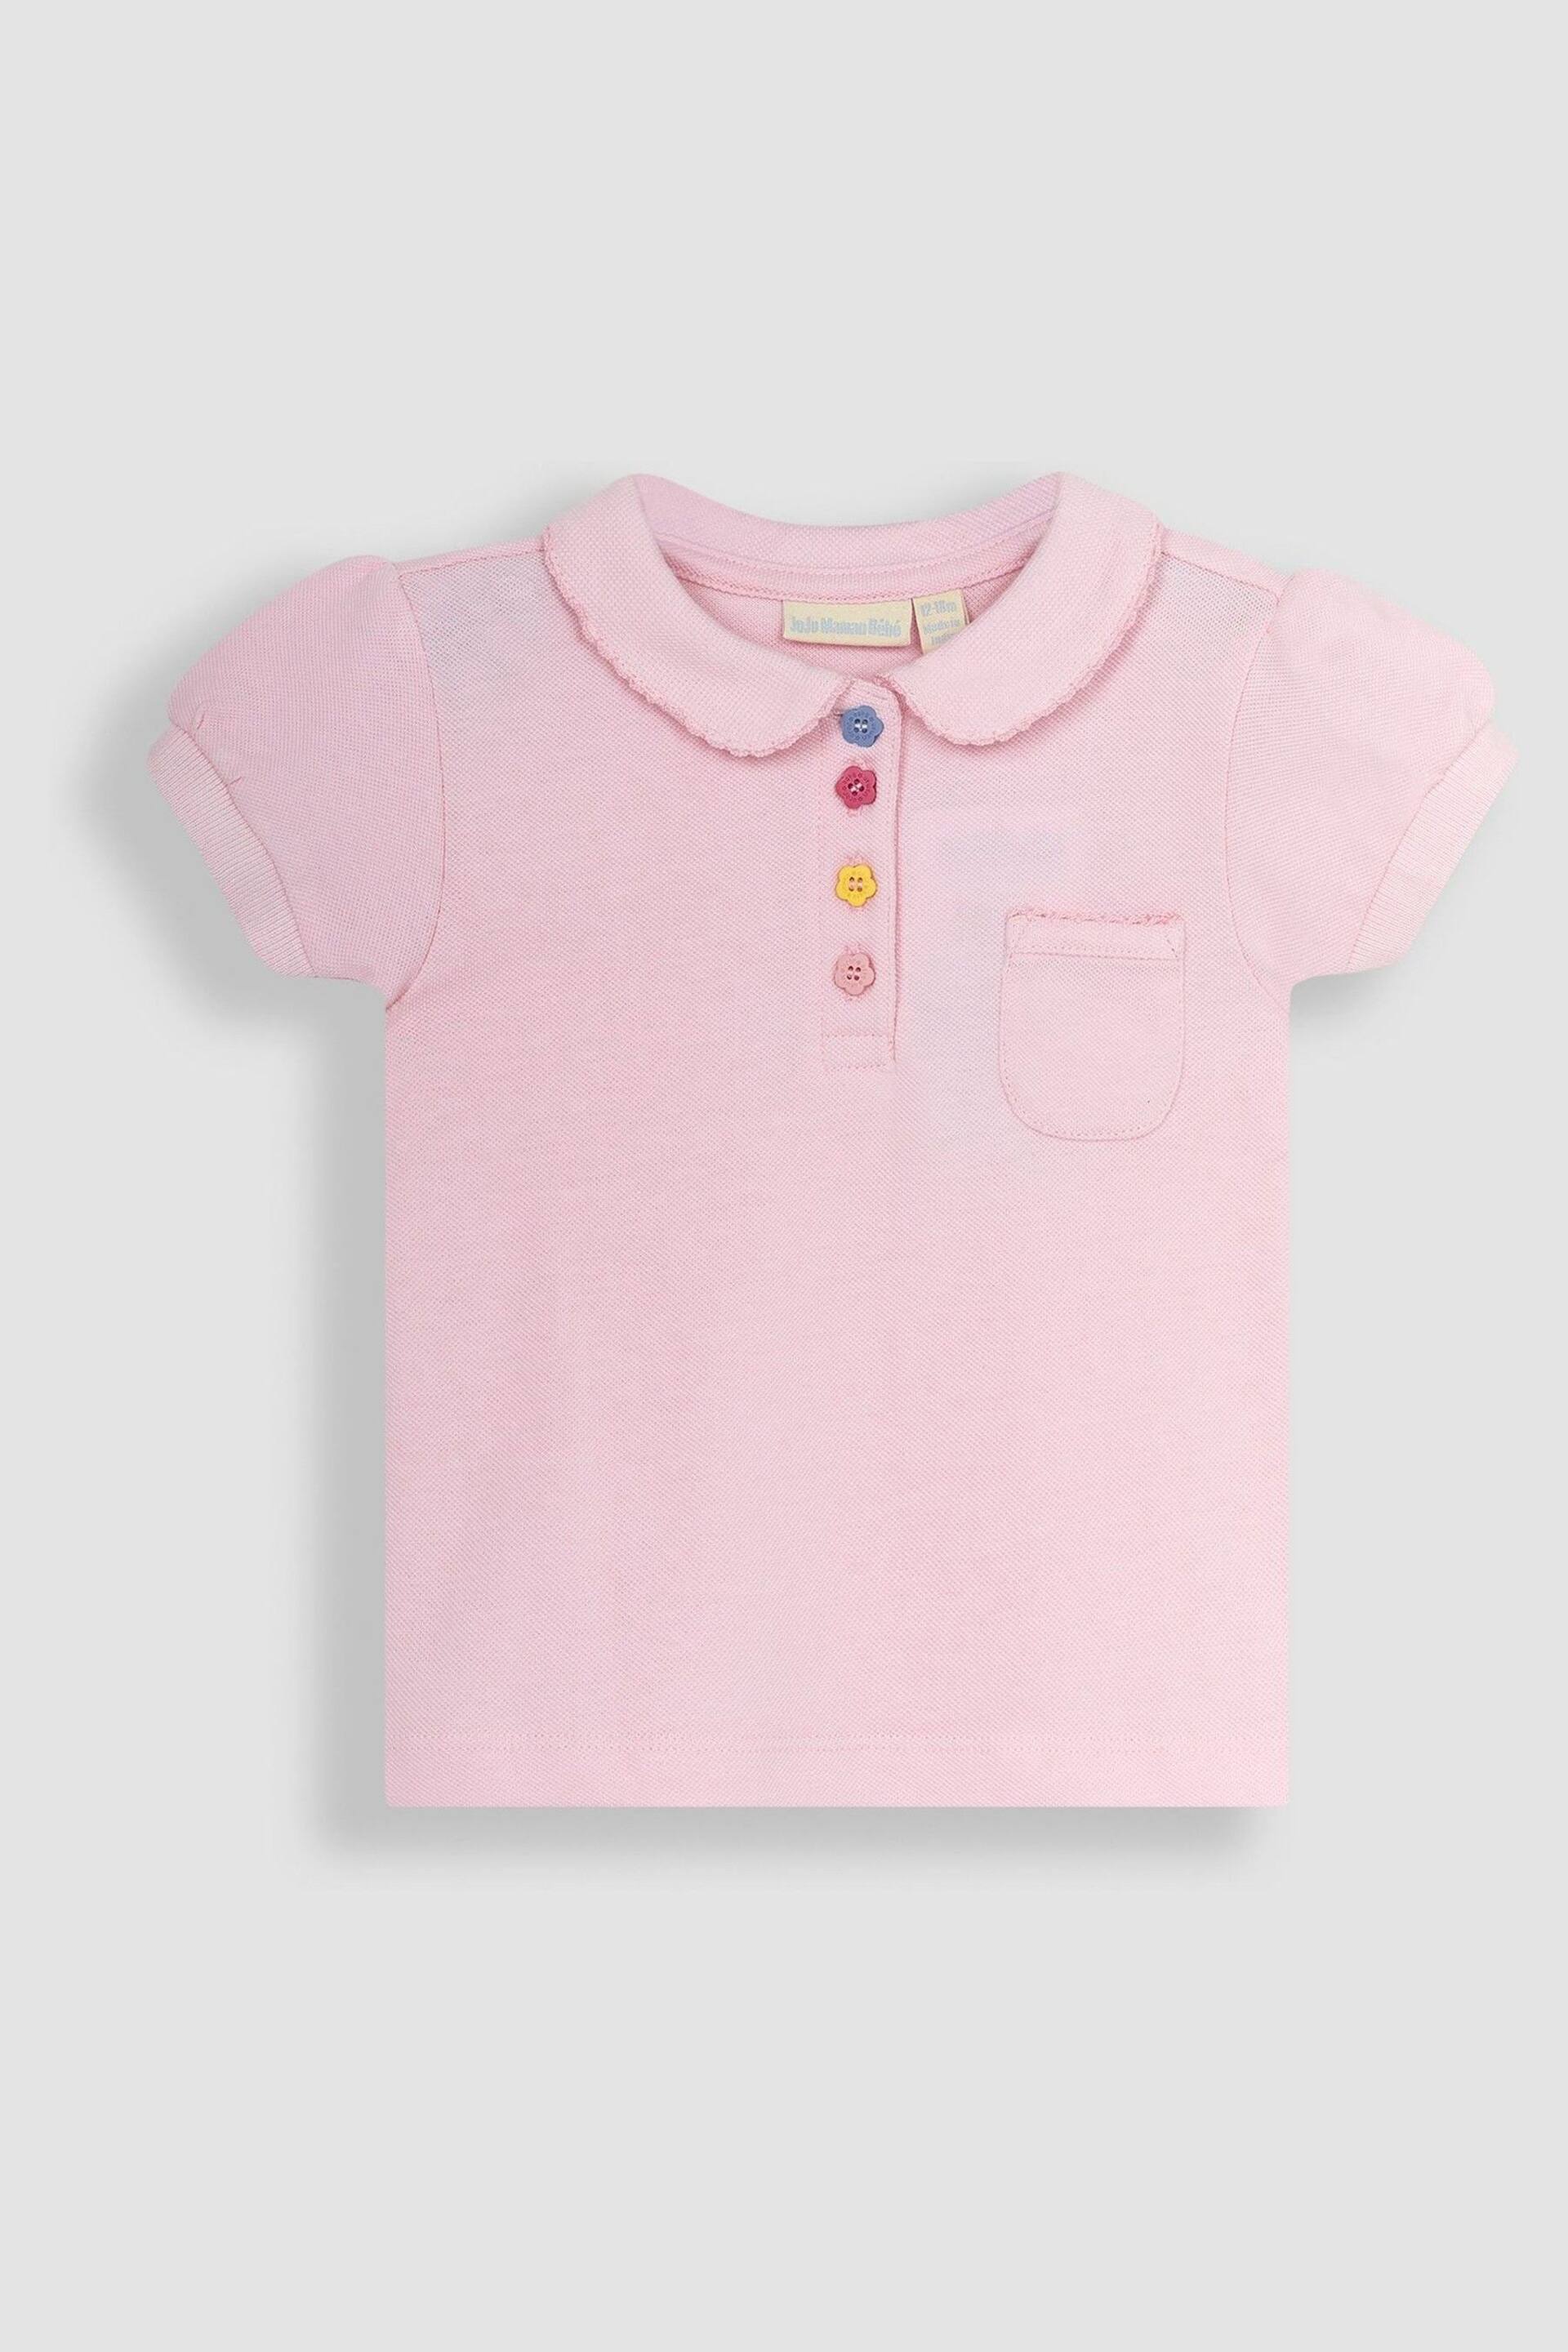 JoJo Maman Bébé Pink Pretty Polo Shirt - Image 1 of 3